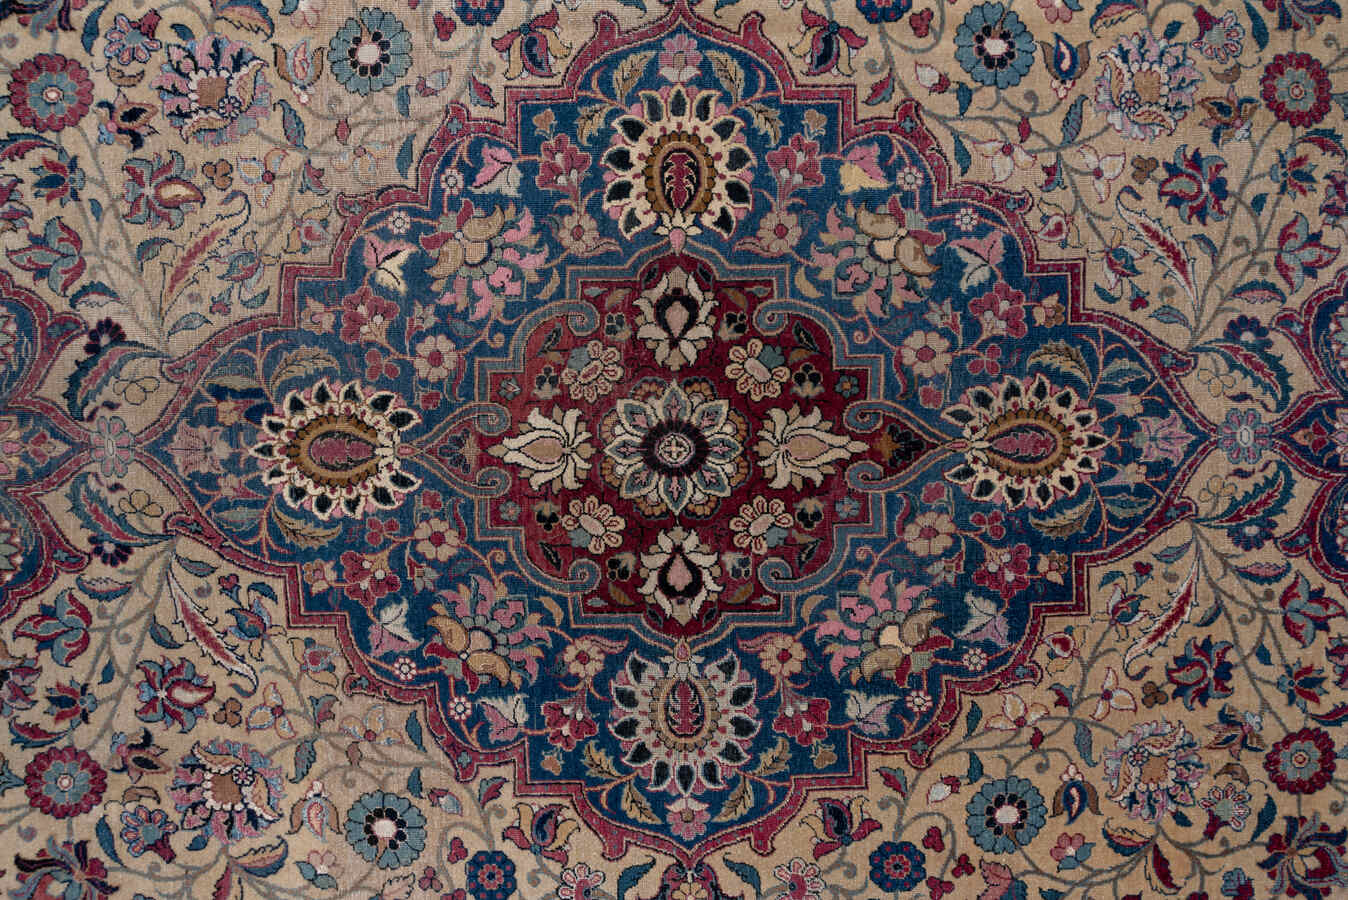 Vintage teheran Carpet - # 56740